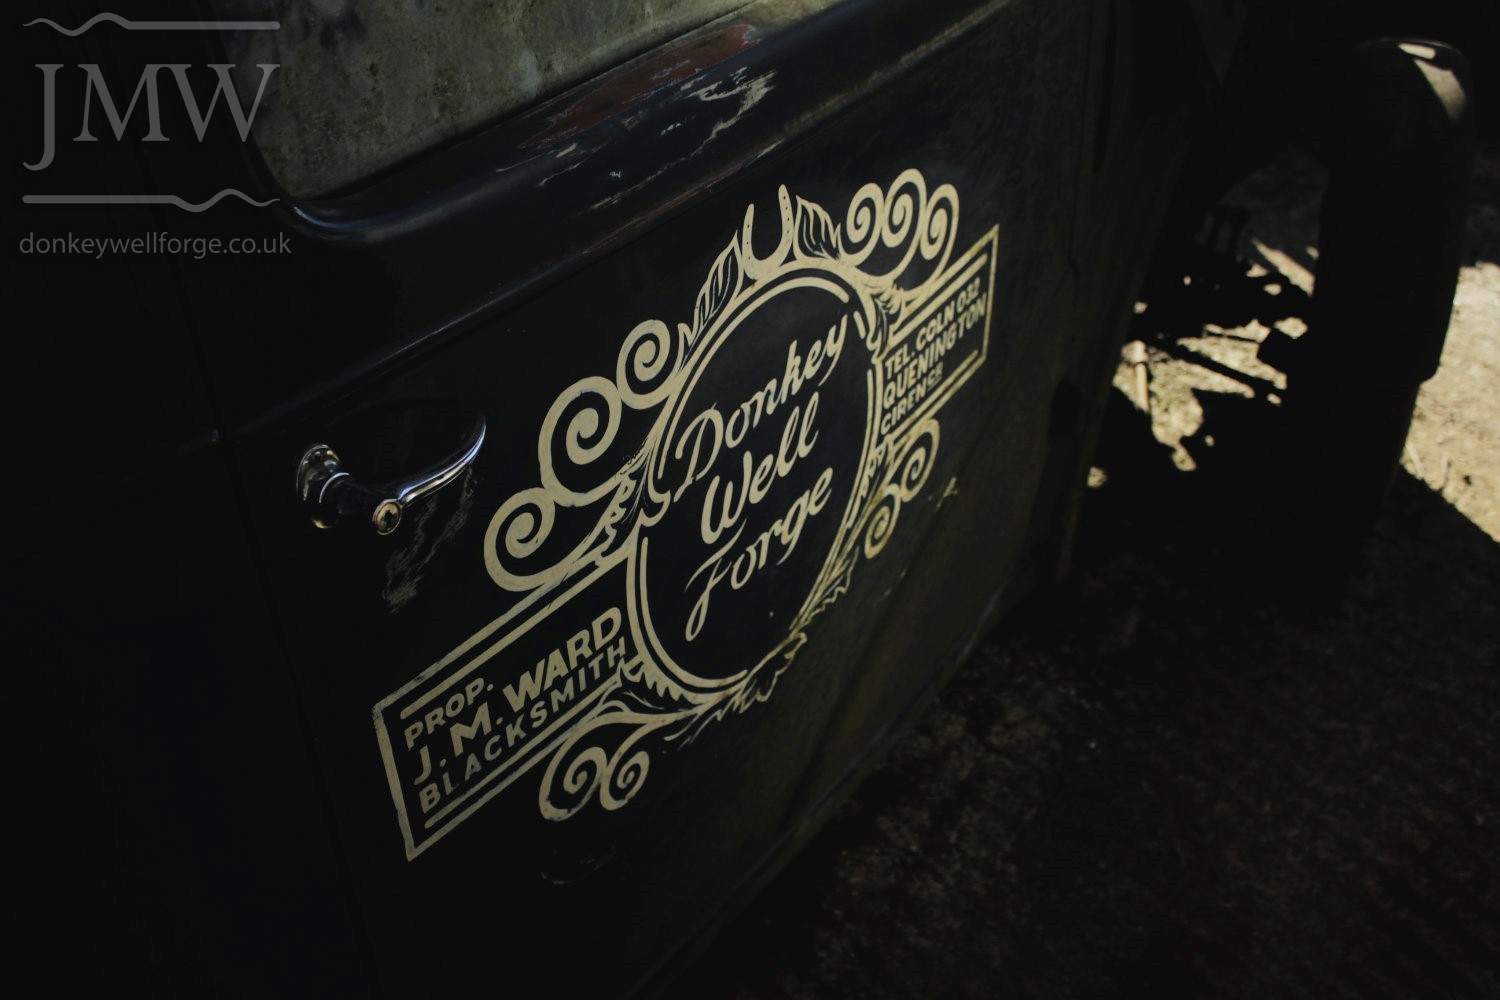 blacksmith-gloucestershire-vintage-car